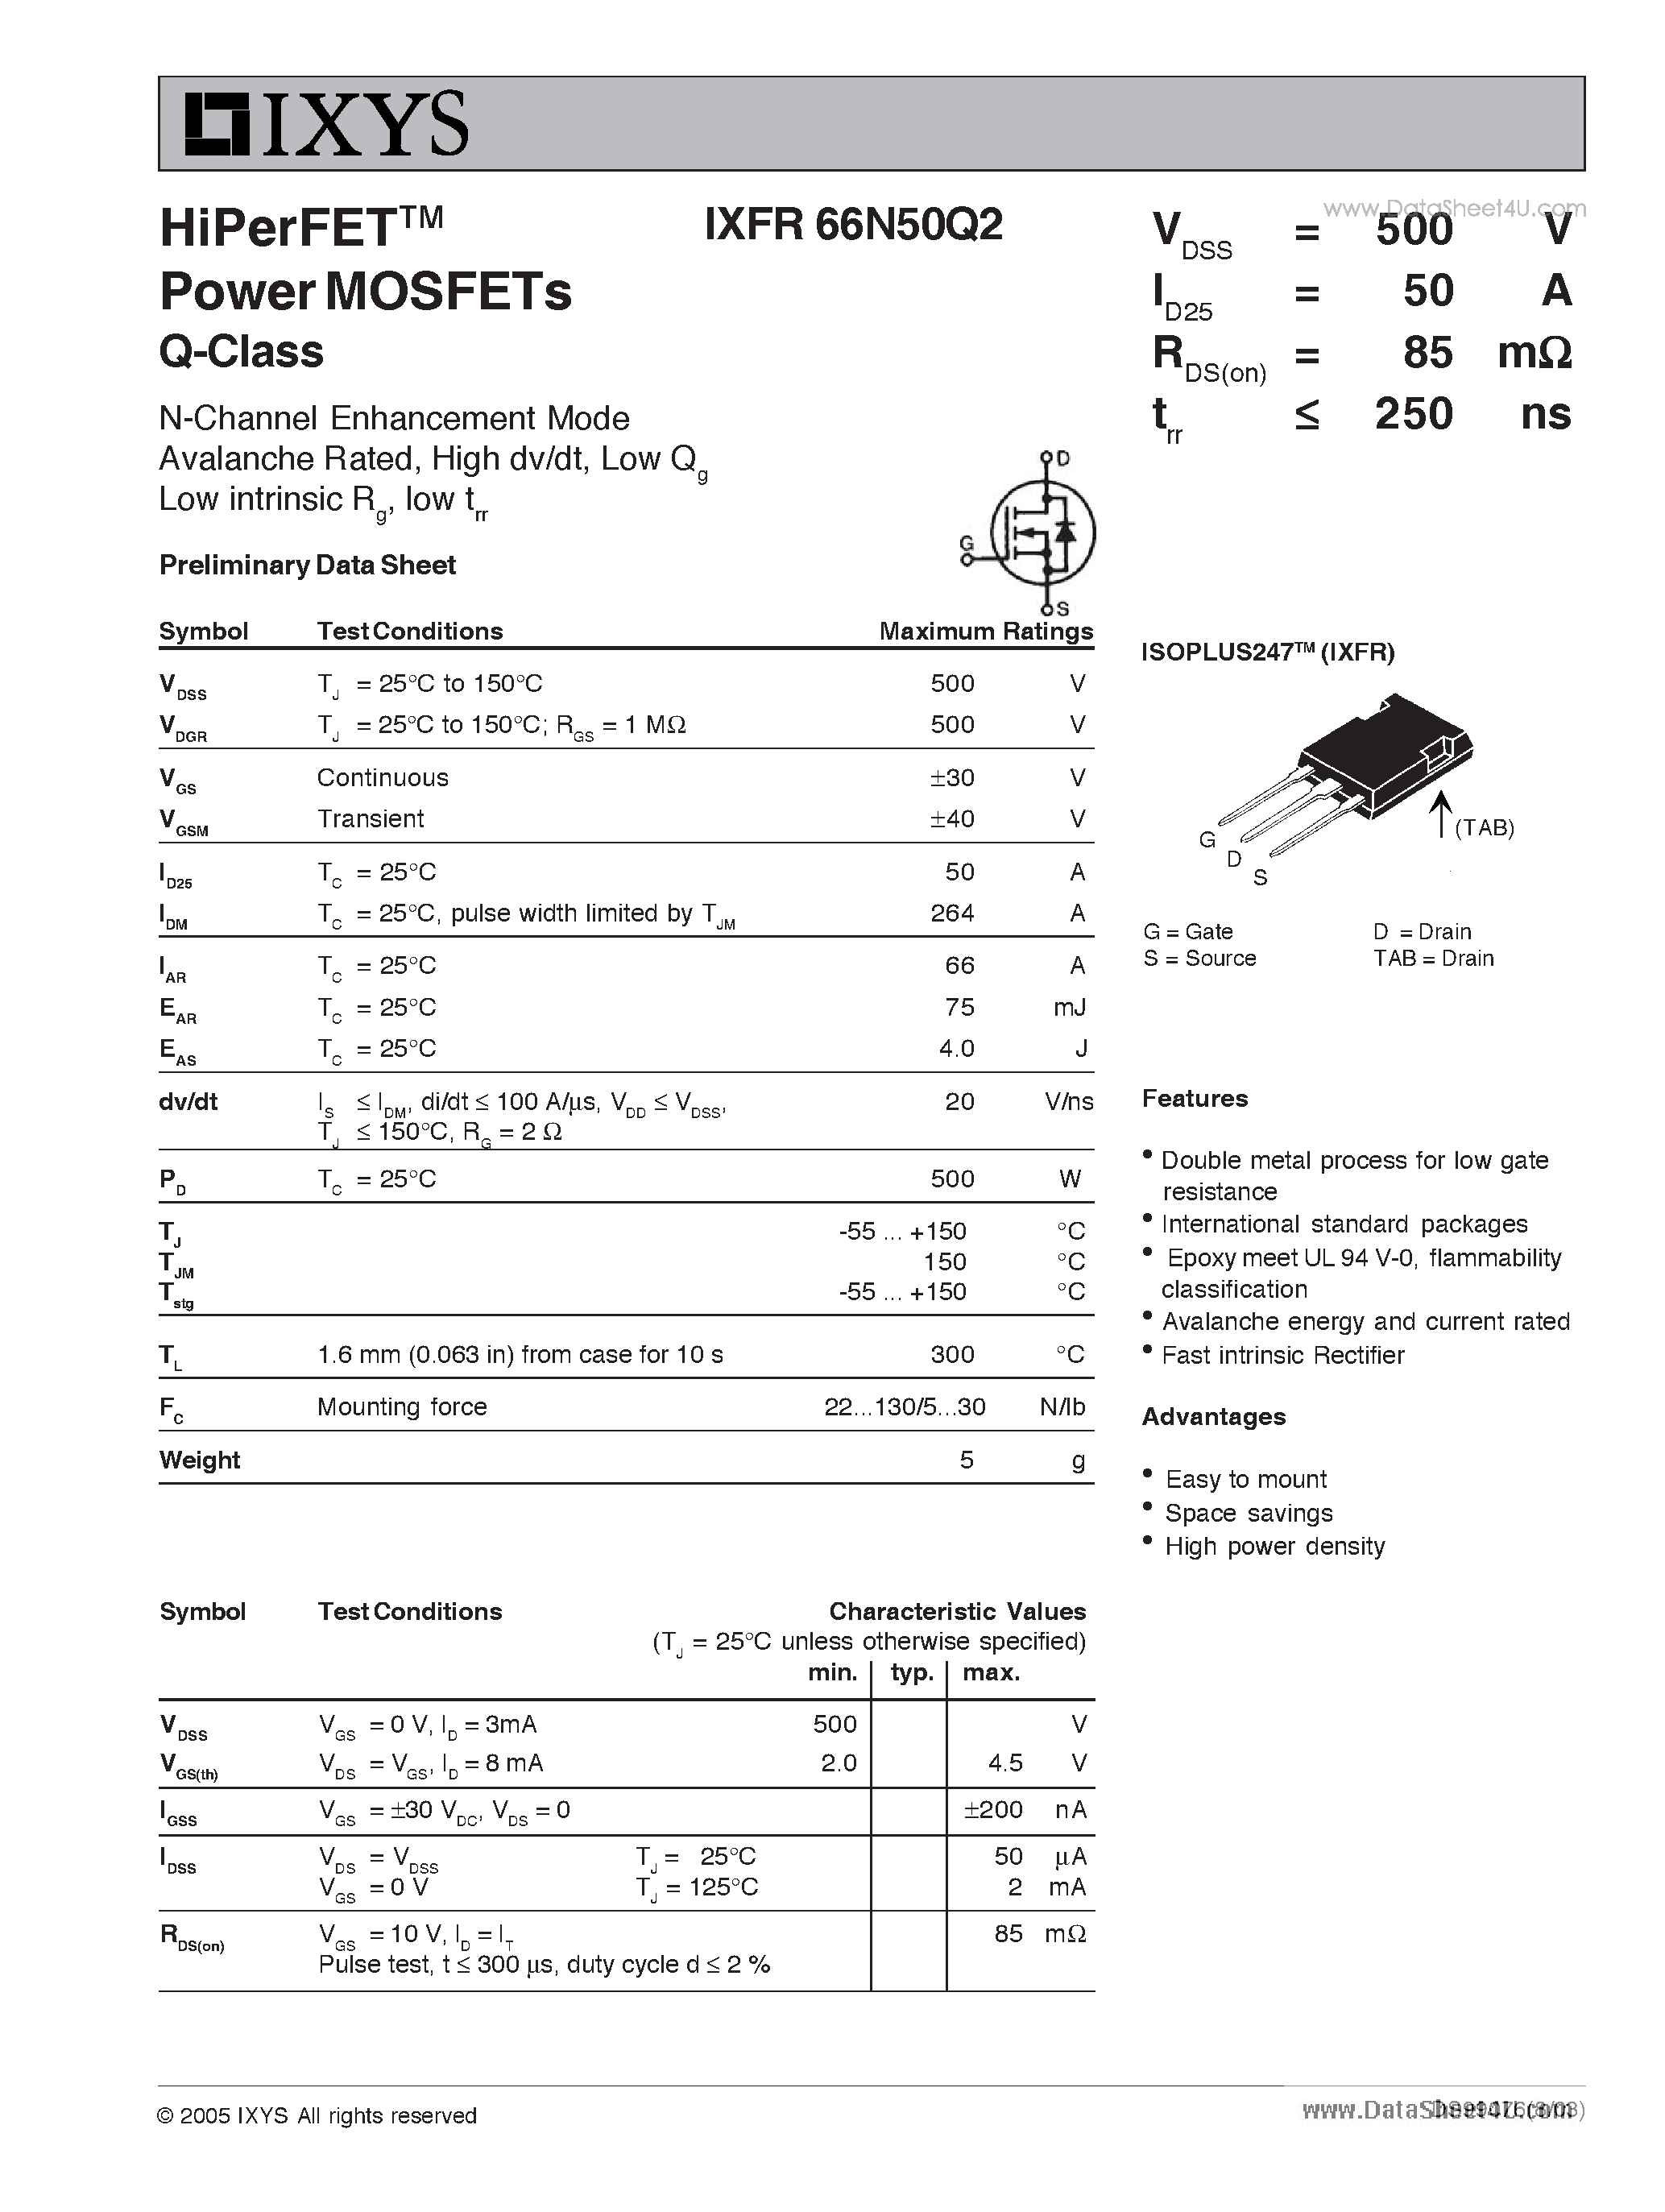 Datasheet IXFR66N50Q2 - HiPerFET Power MOSFETs Q-Class page 1